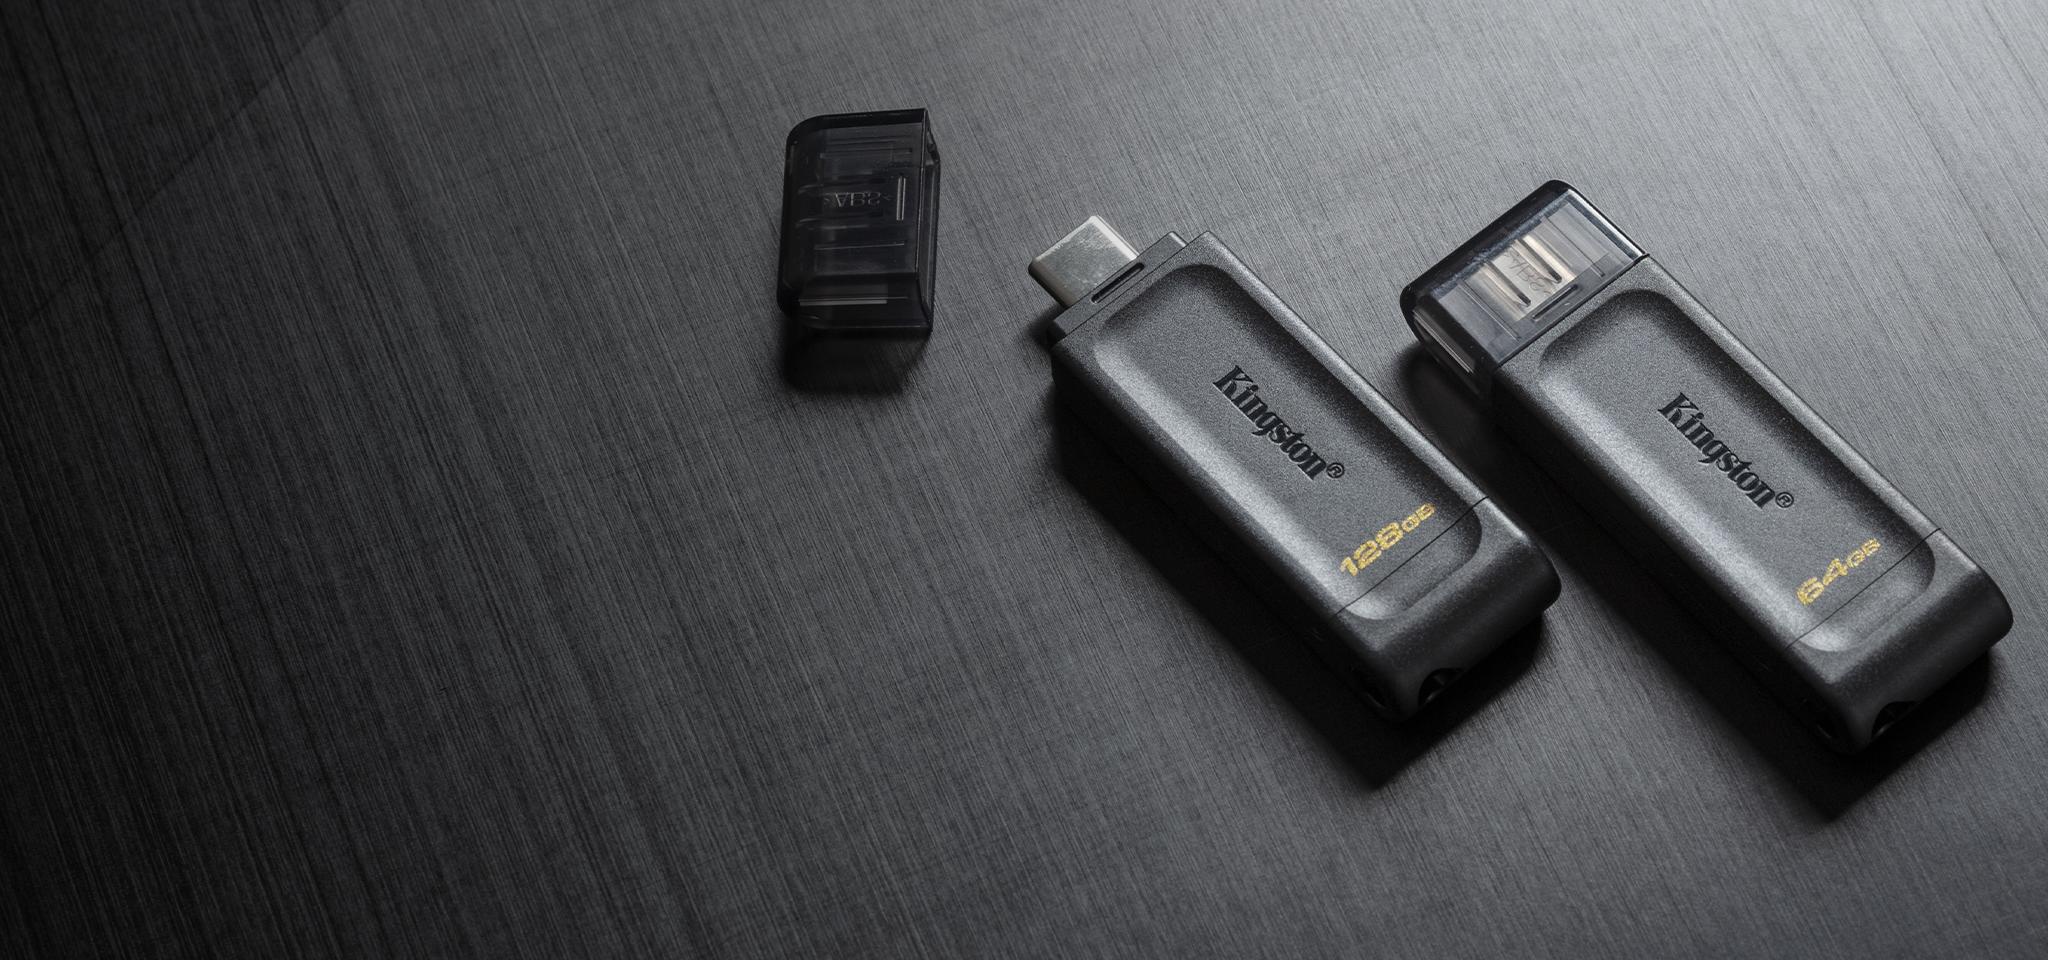 DataTraveler 70  USB-Cフラッシュドライブ